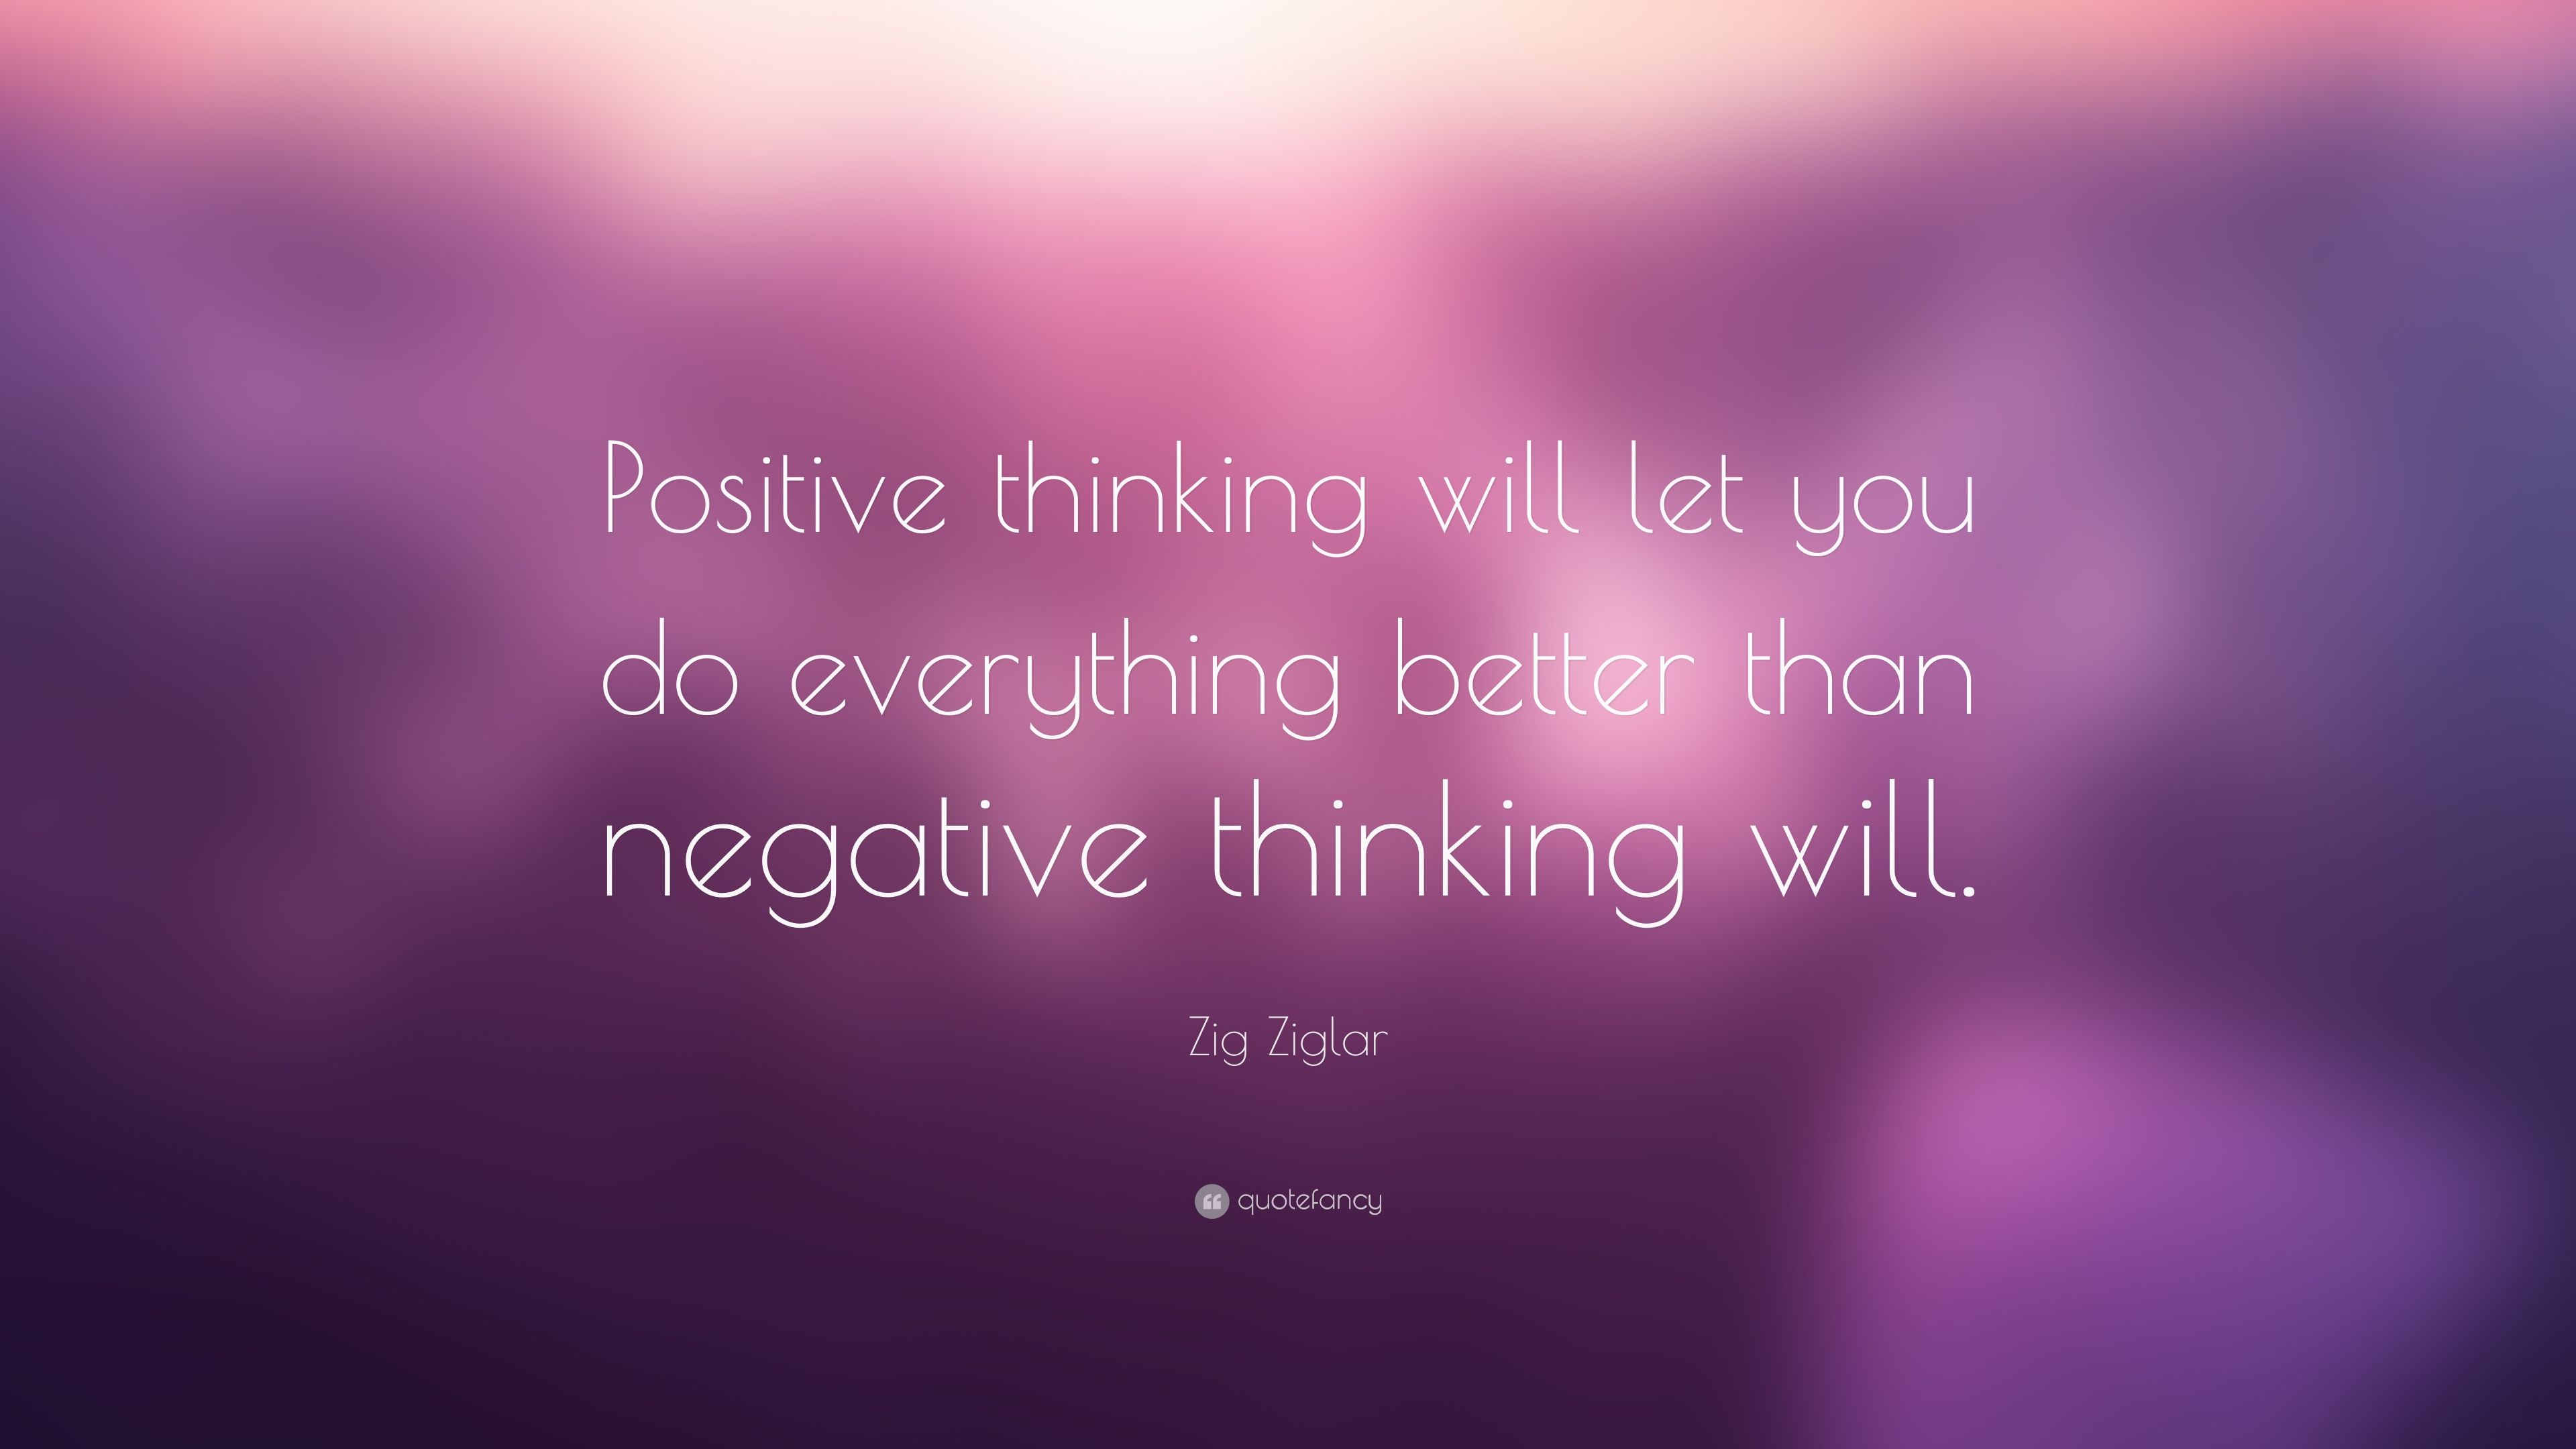 Zig Ziglar Quote: “Positive thinking will let you do everything ...